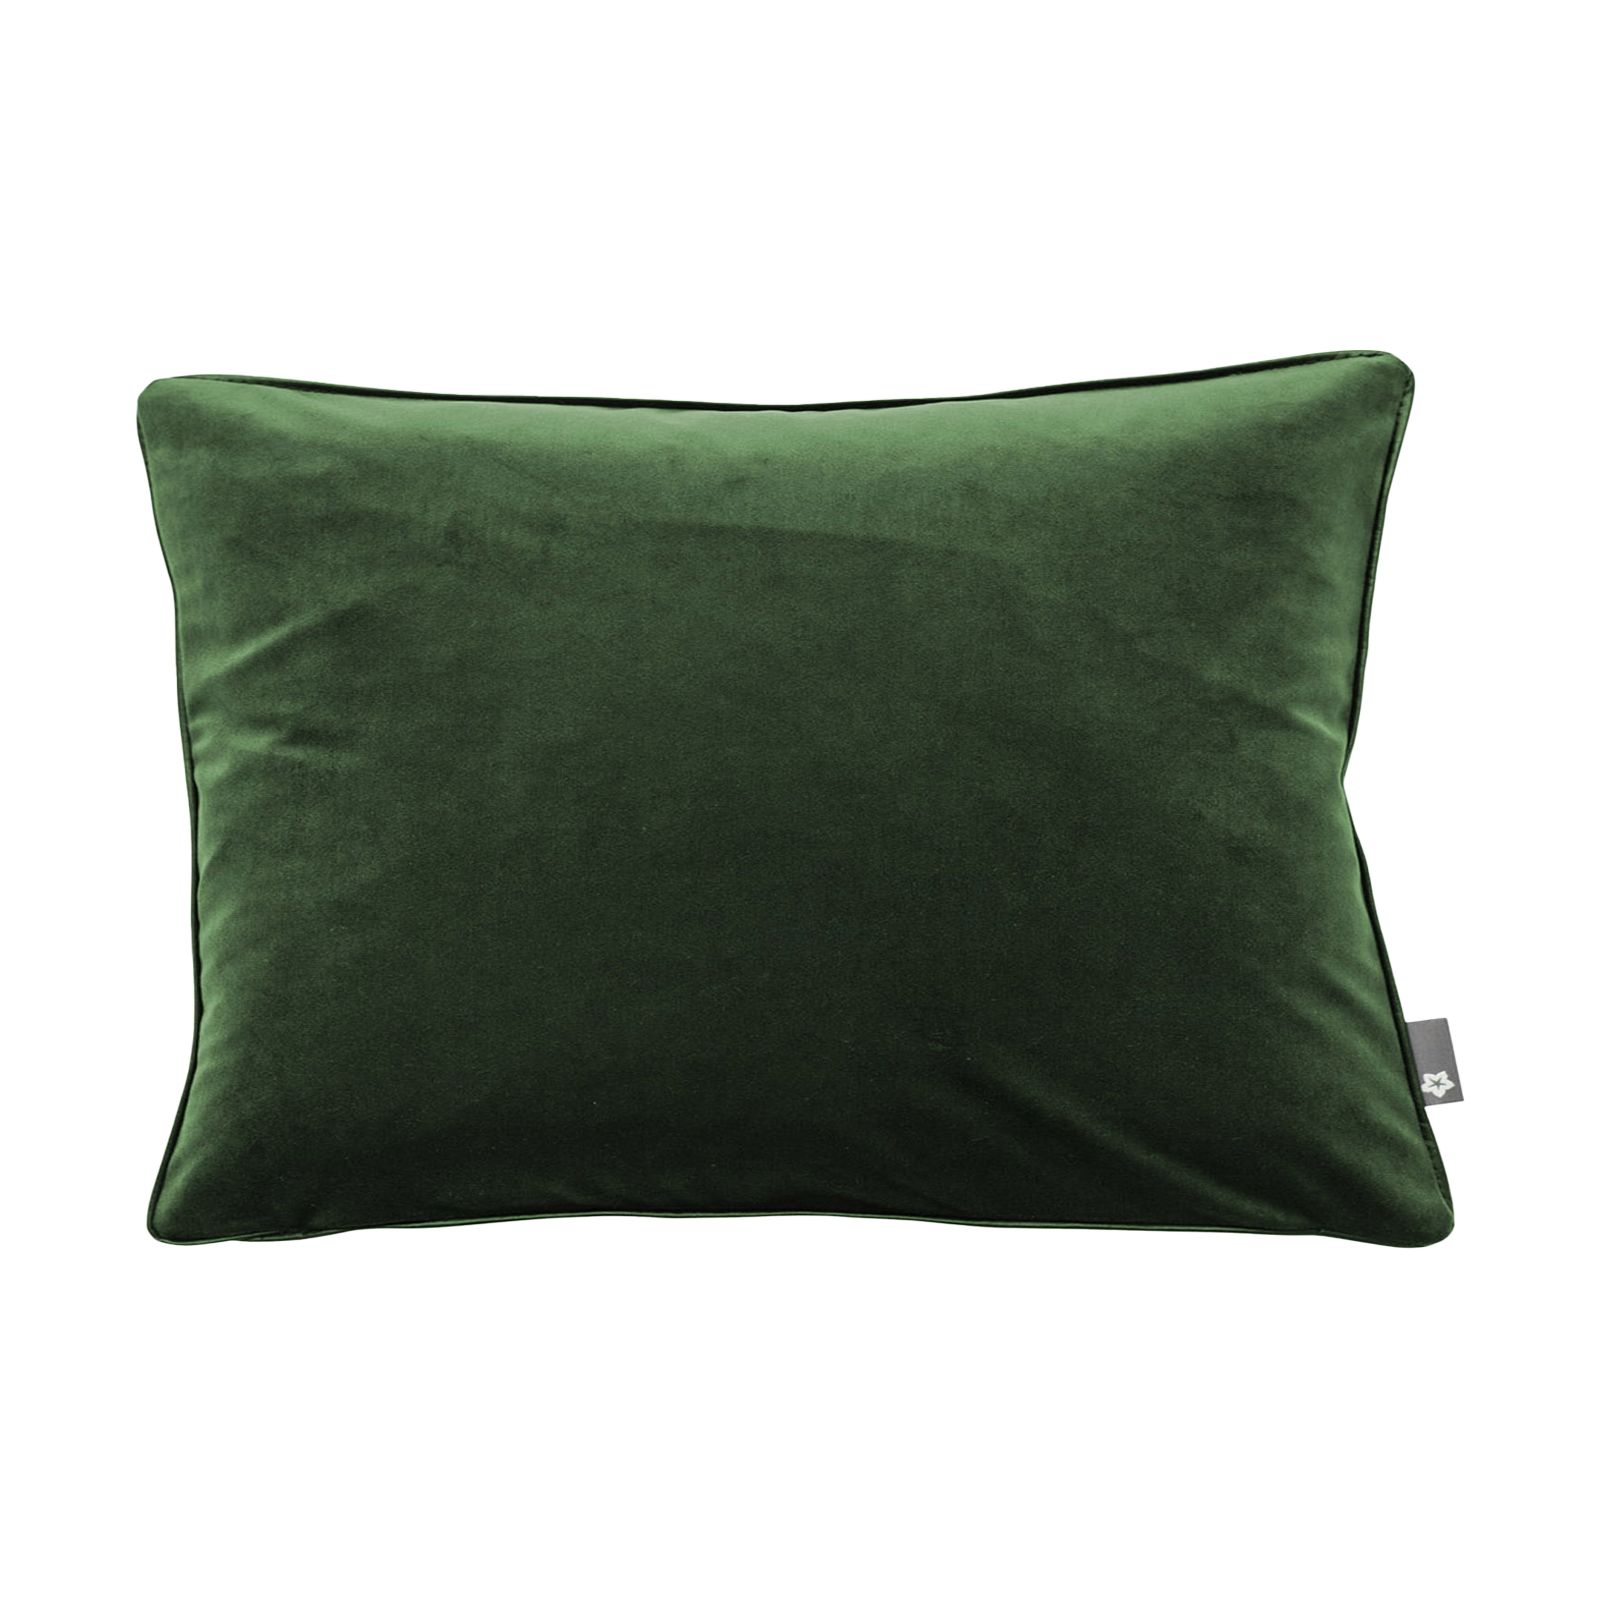 Größe: 31x 51 cm Farbe: grasgrün #farbe_grasgrün